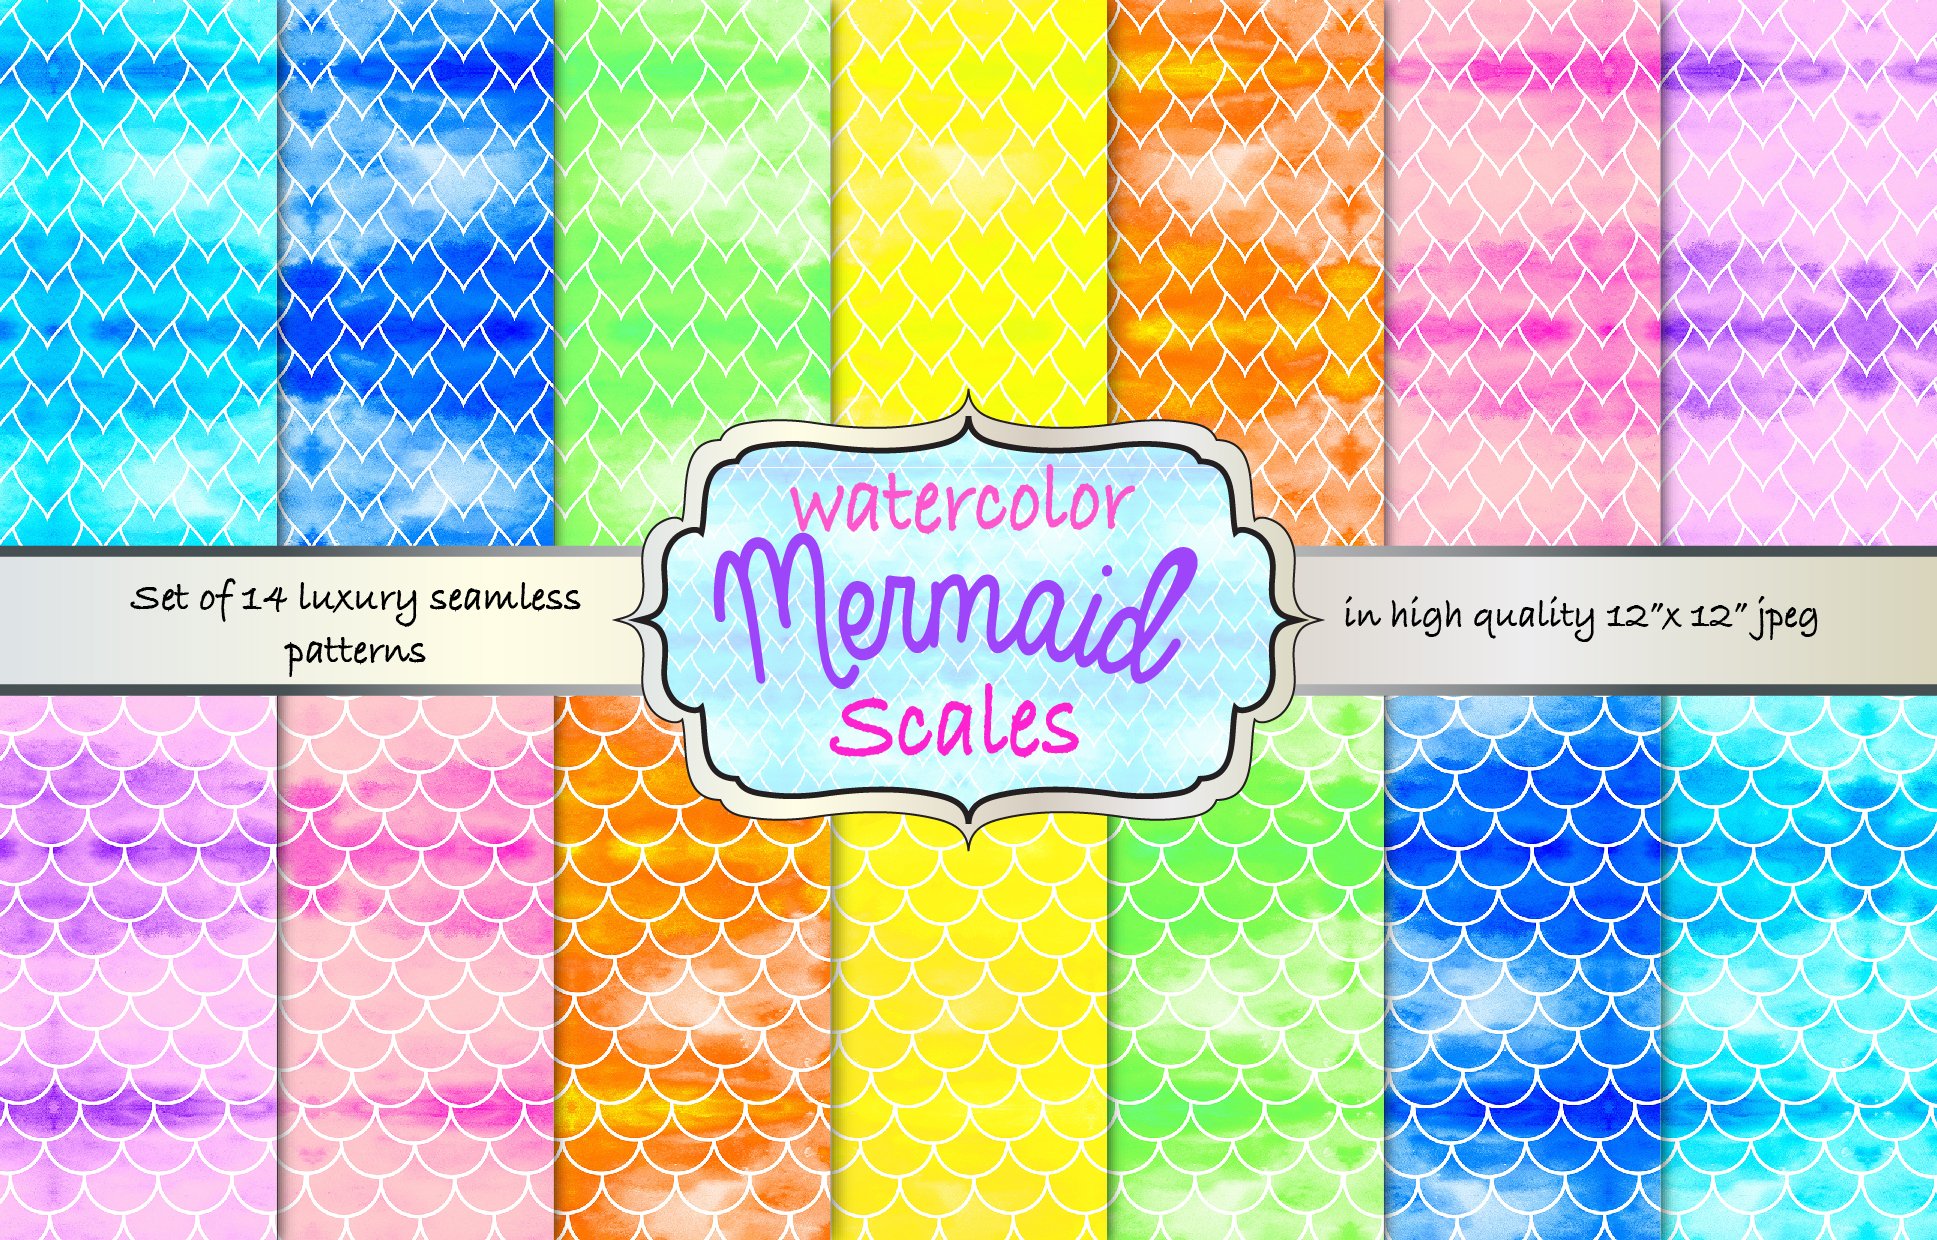 Mermaid scales rainbow pattern pack cover image.